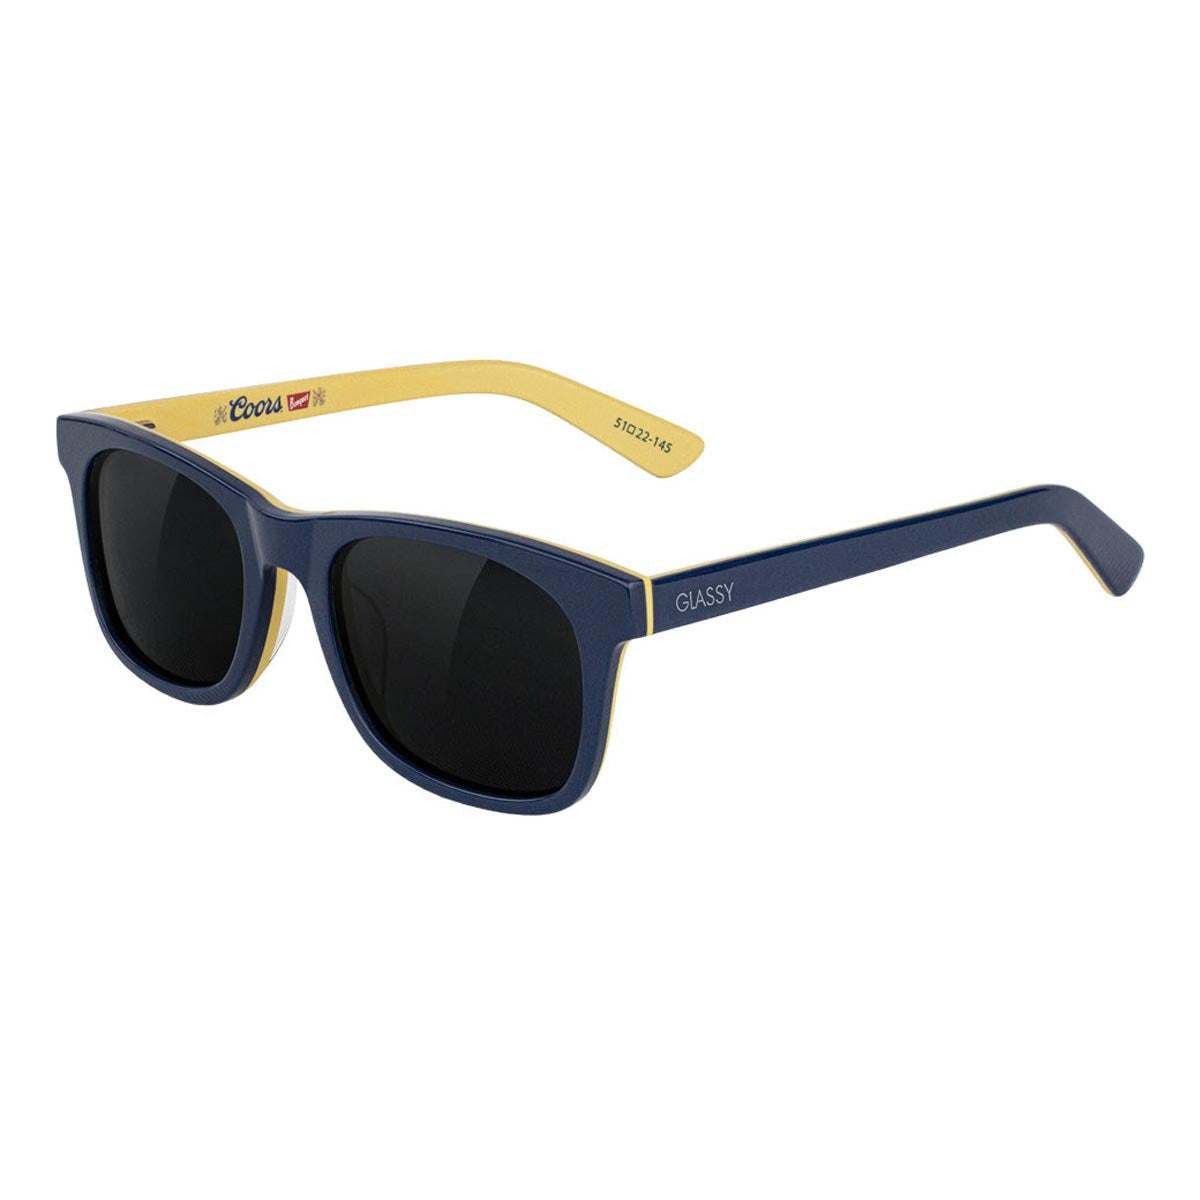 Glassy x Coors Banquet Hampshire Sunglasses - Blue image 2